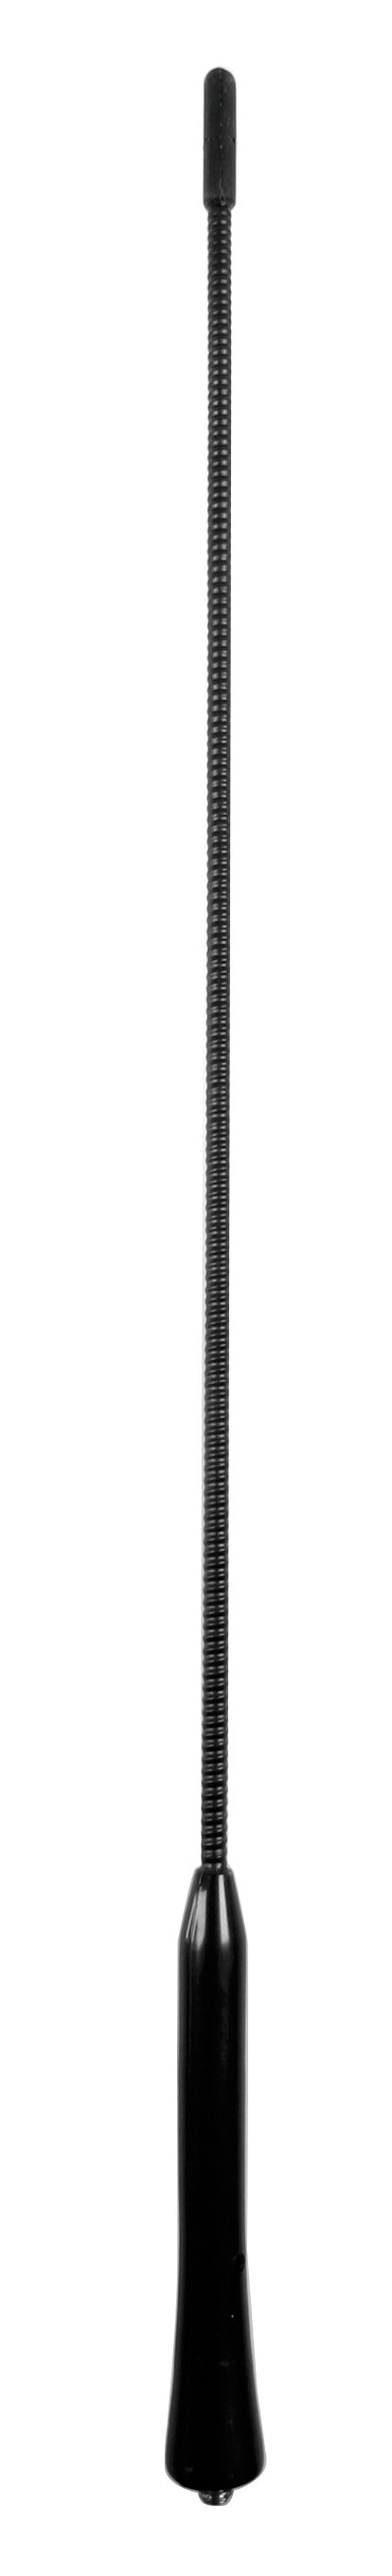 Lampa replacement Mast (AM/FM) - 41 cm - Ø 5 mm thumb